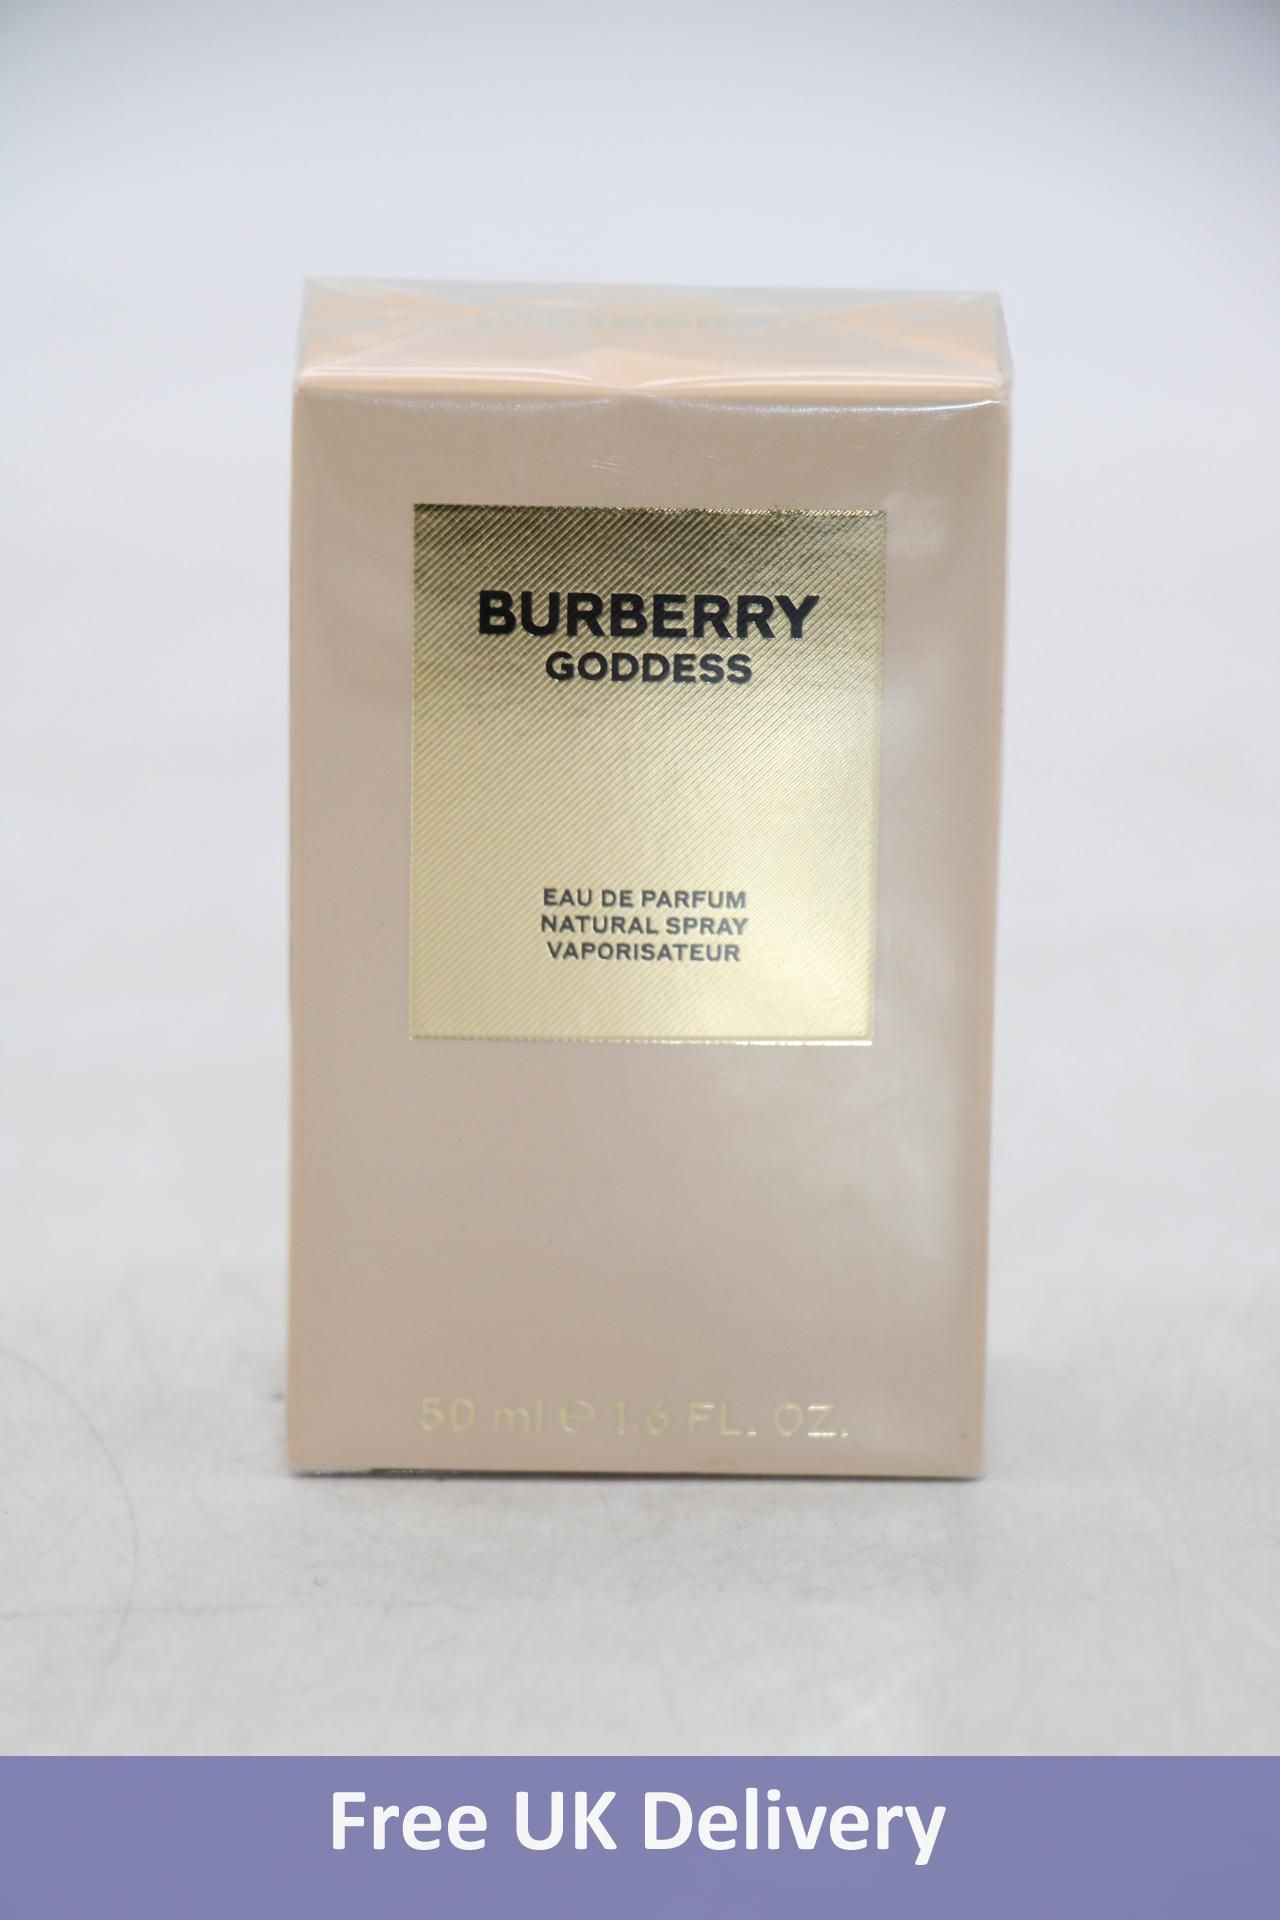 Burberry Goddess Eau de Parfum, 50ml